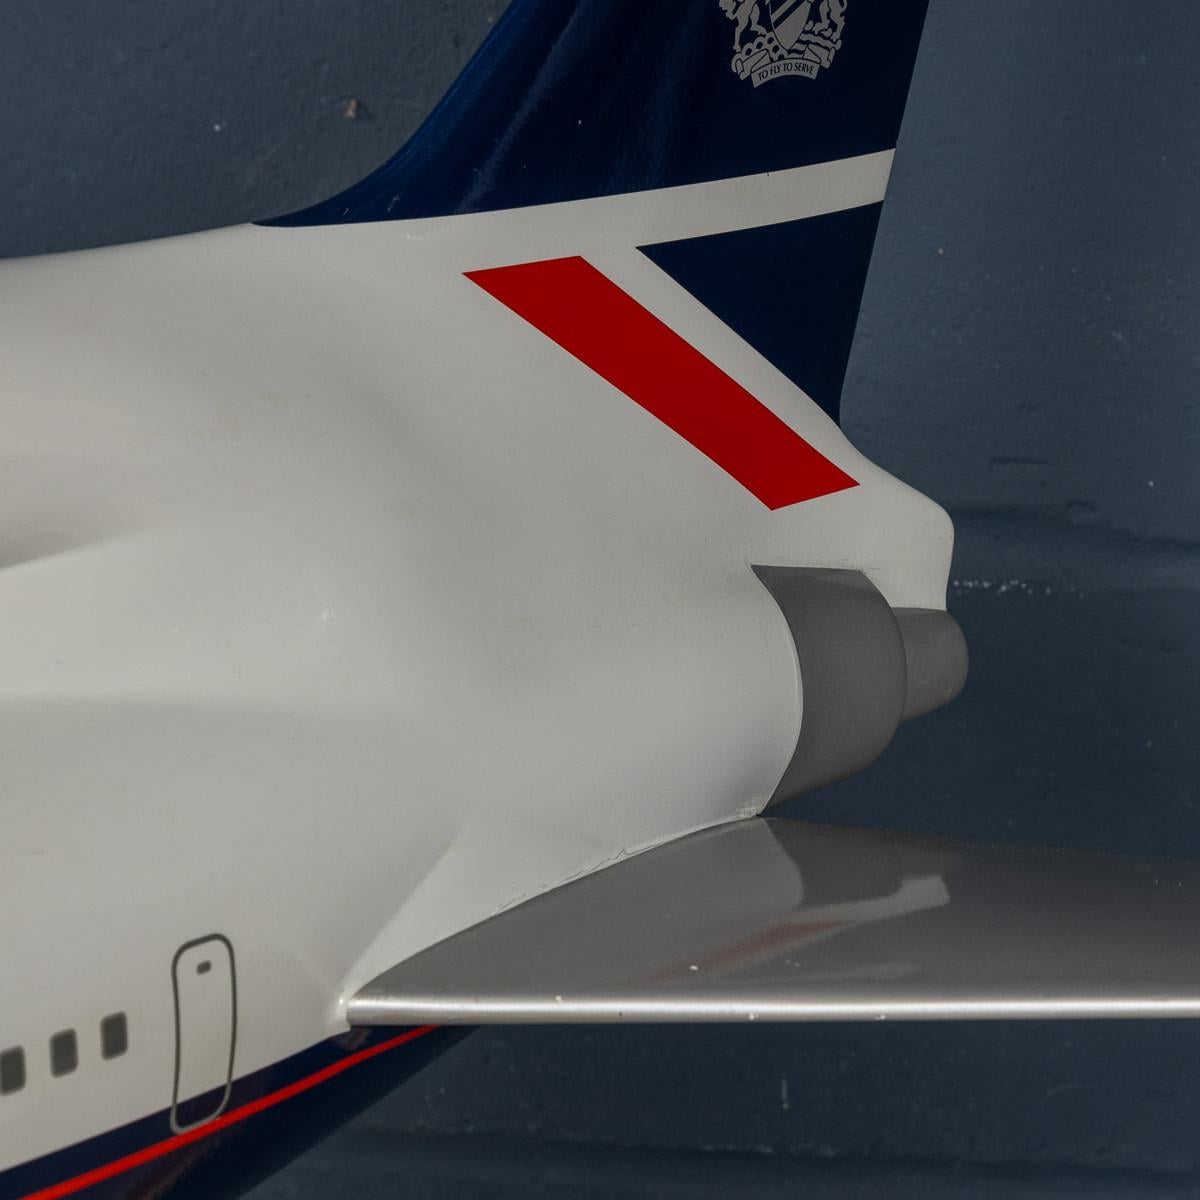 Large Model Tristar Jetplane With A British Airways 